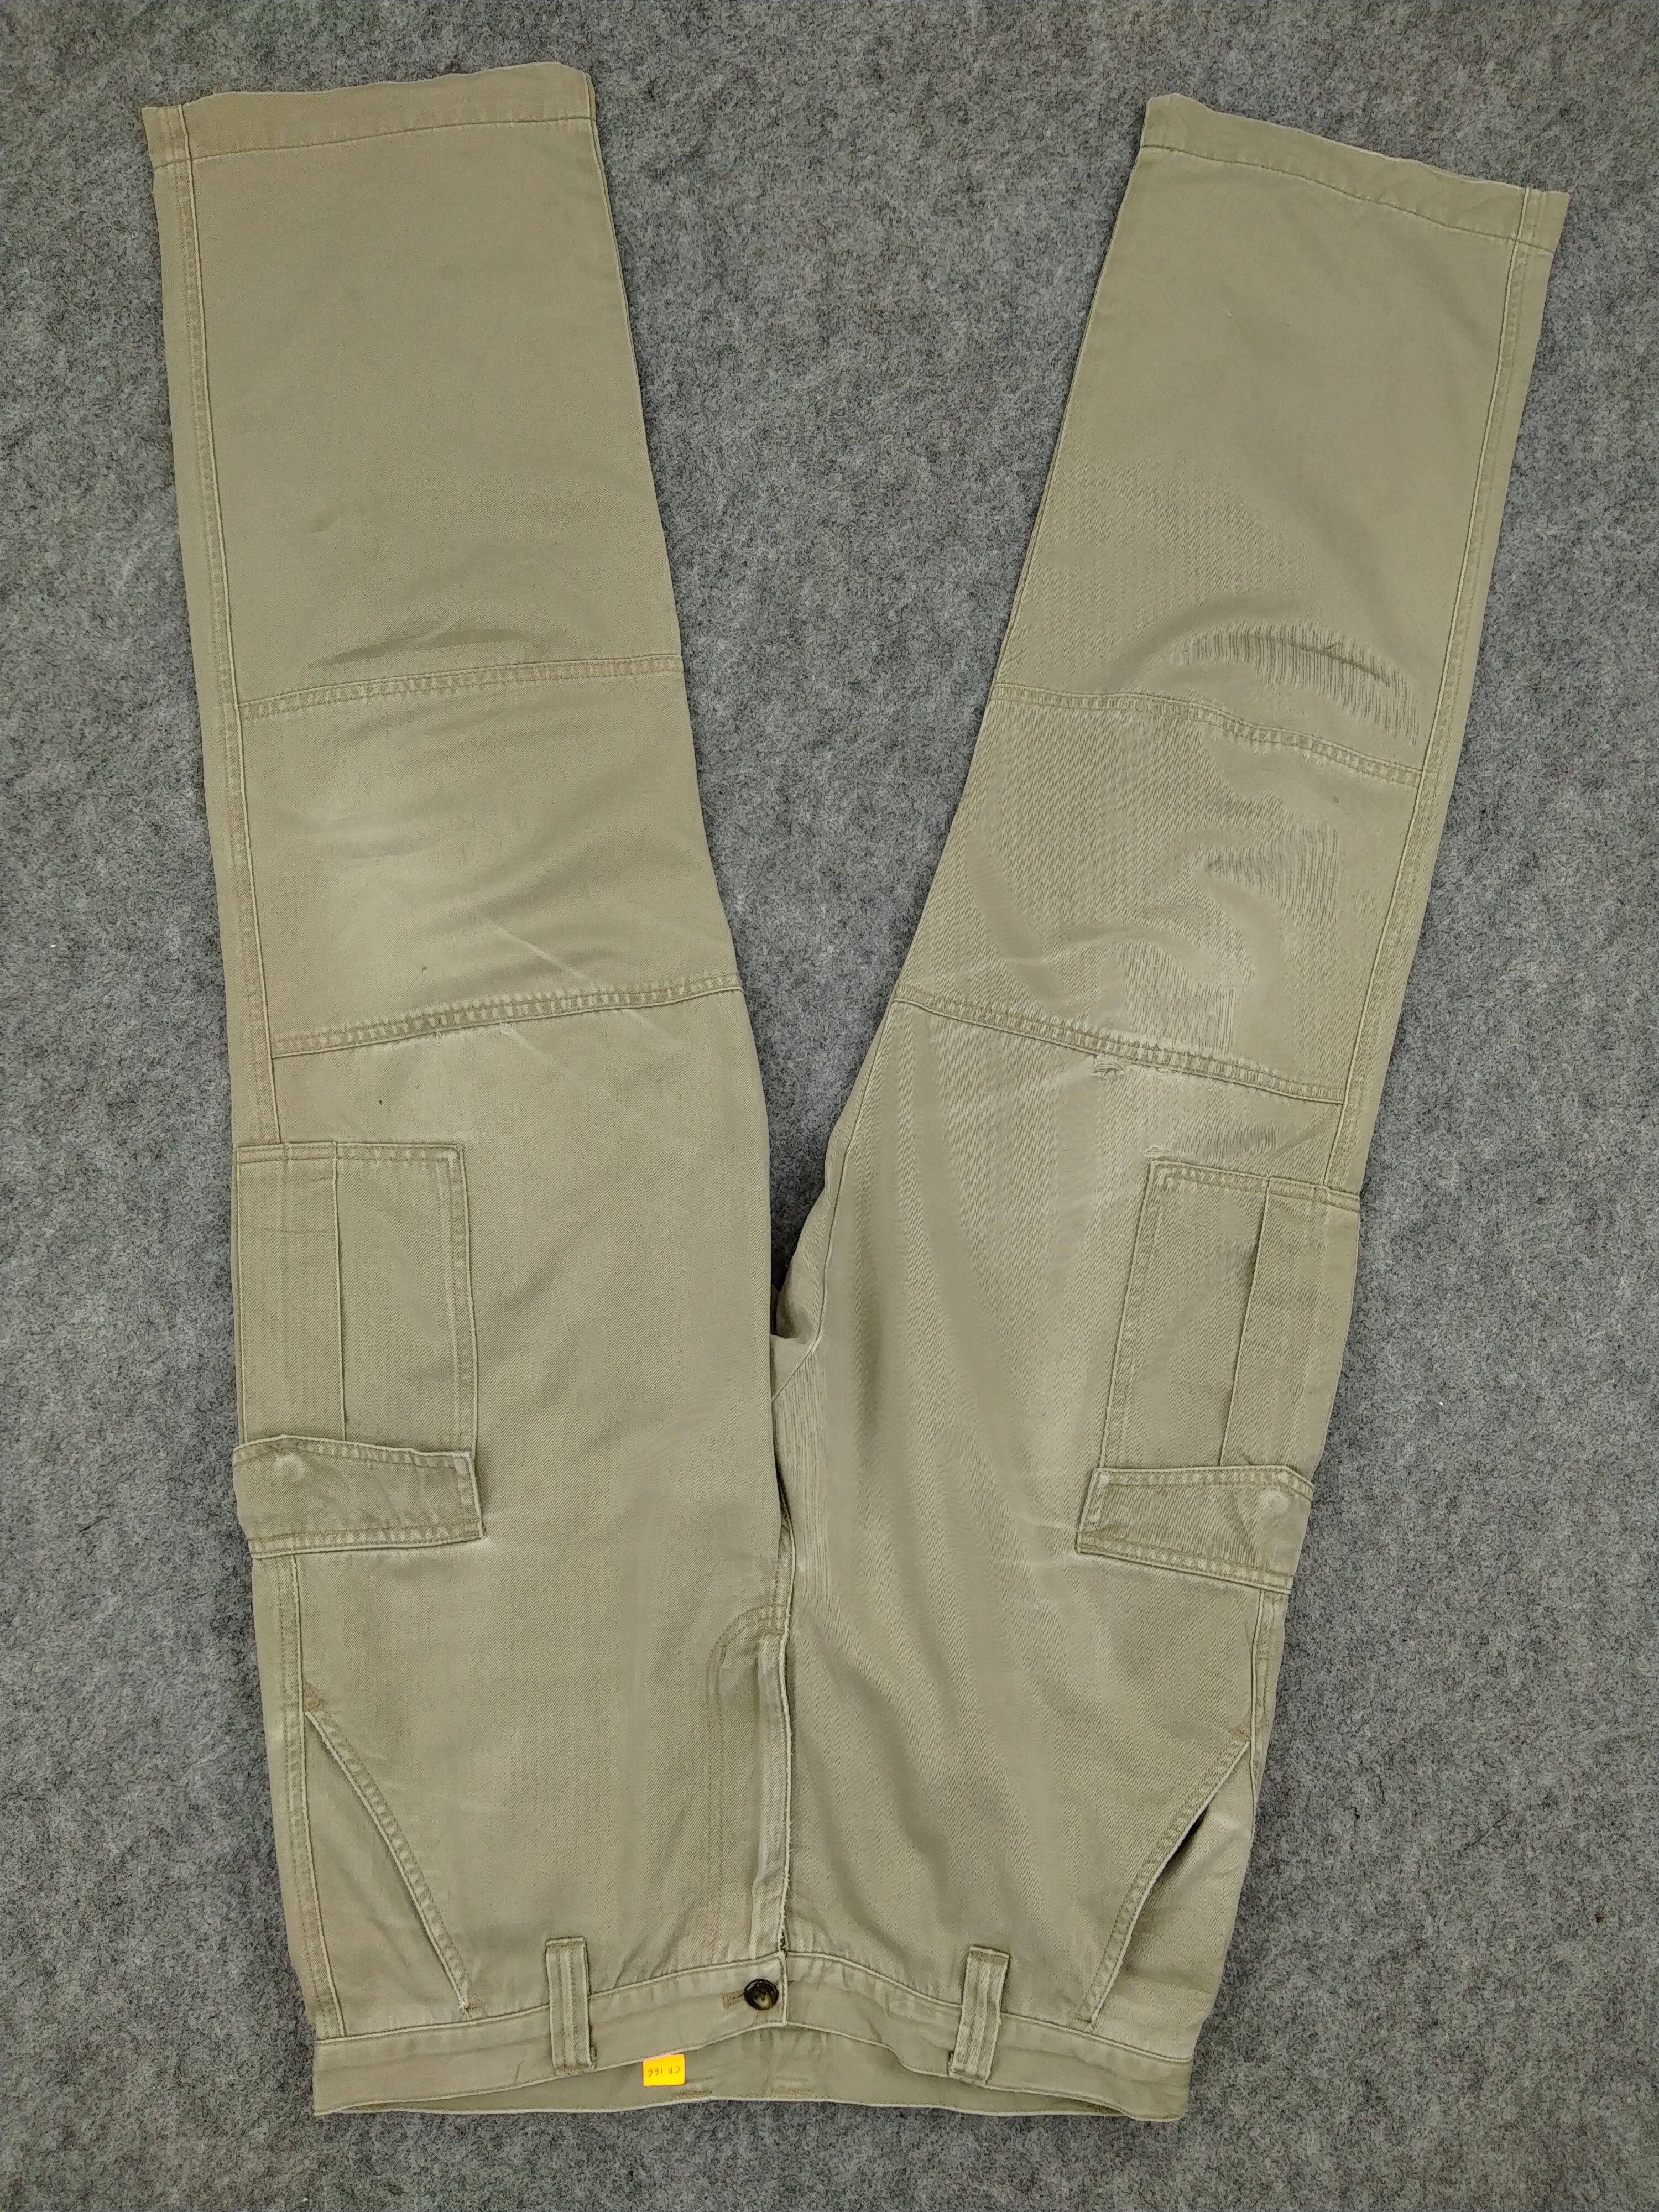 Japanese Brand Pbi Chinos Cargo Multi Pocket Pants -CP166 | Grailed